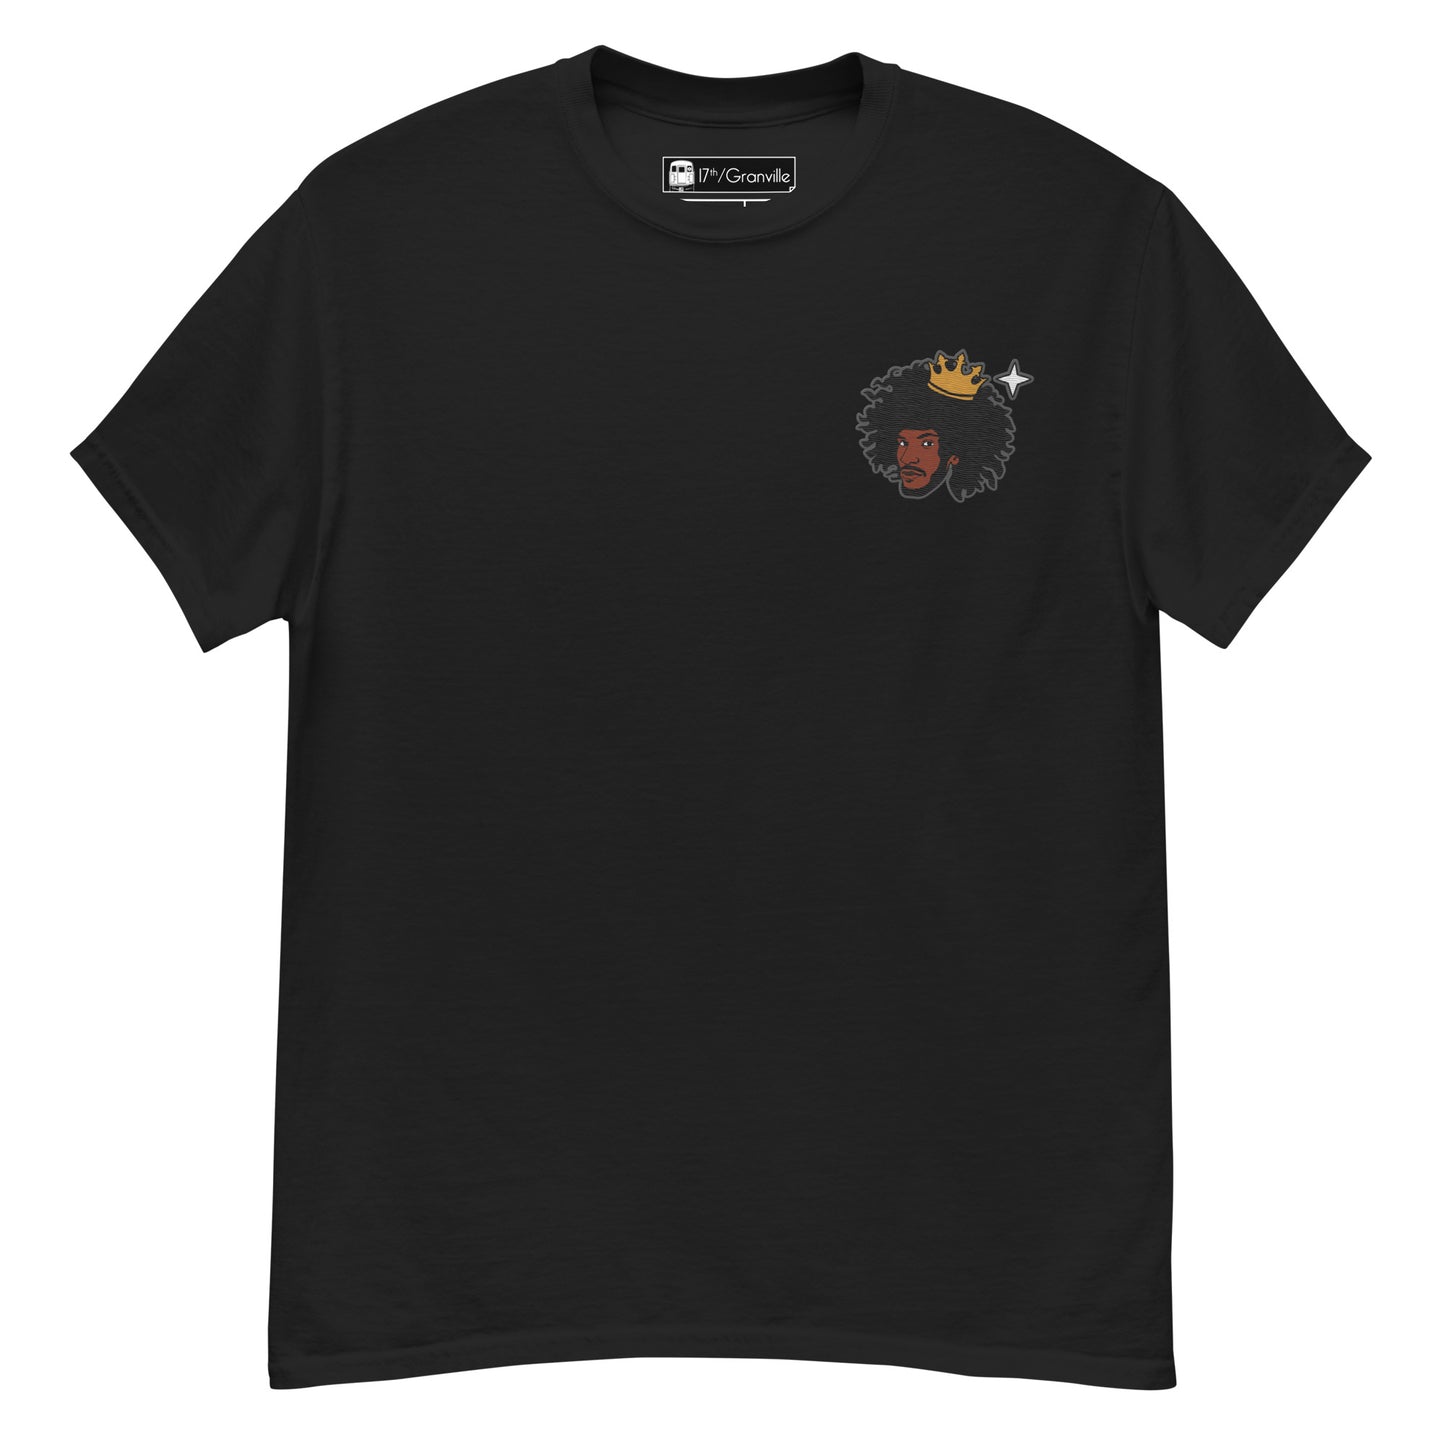 Black Royalty T-Shirt